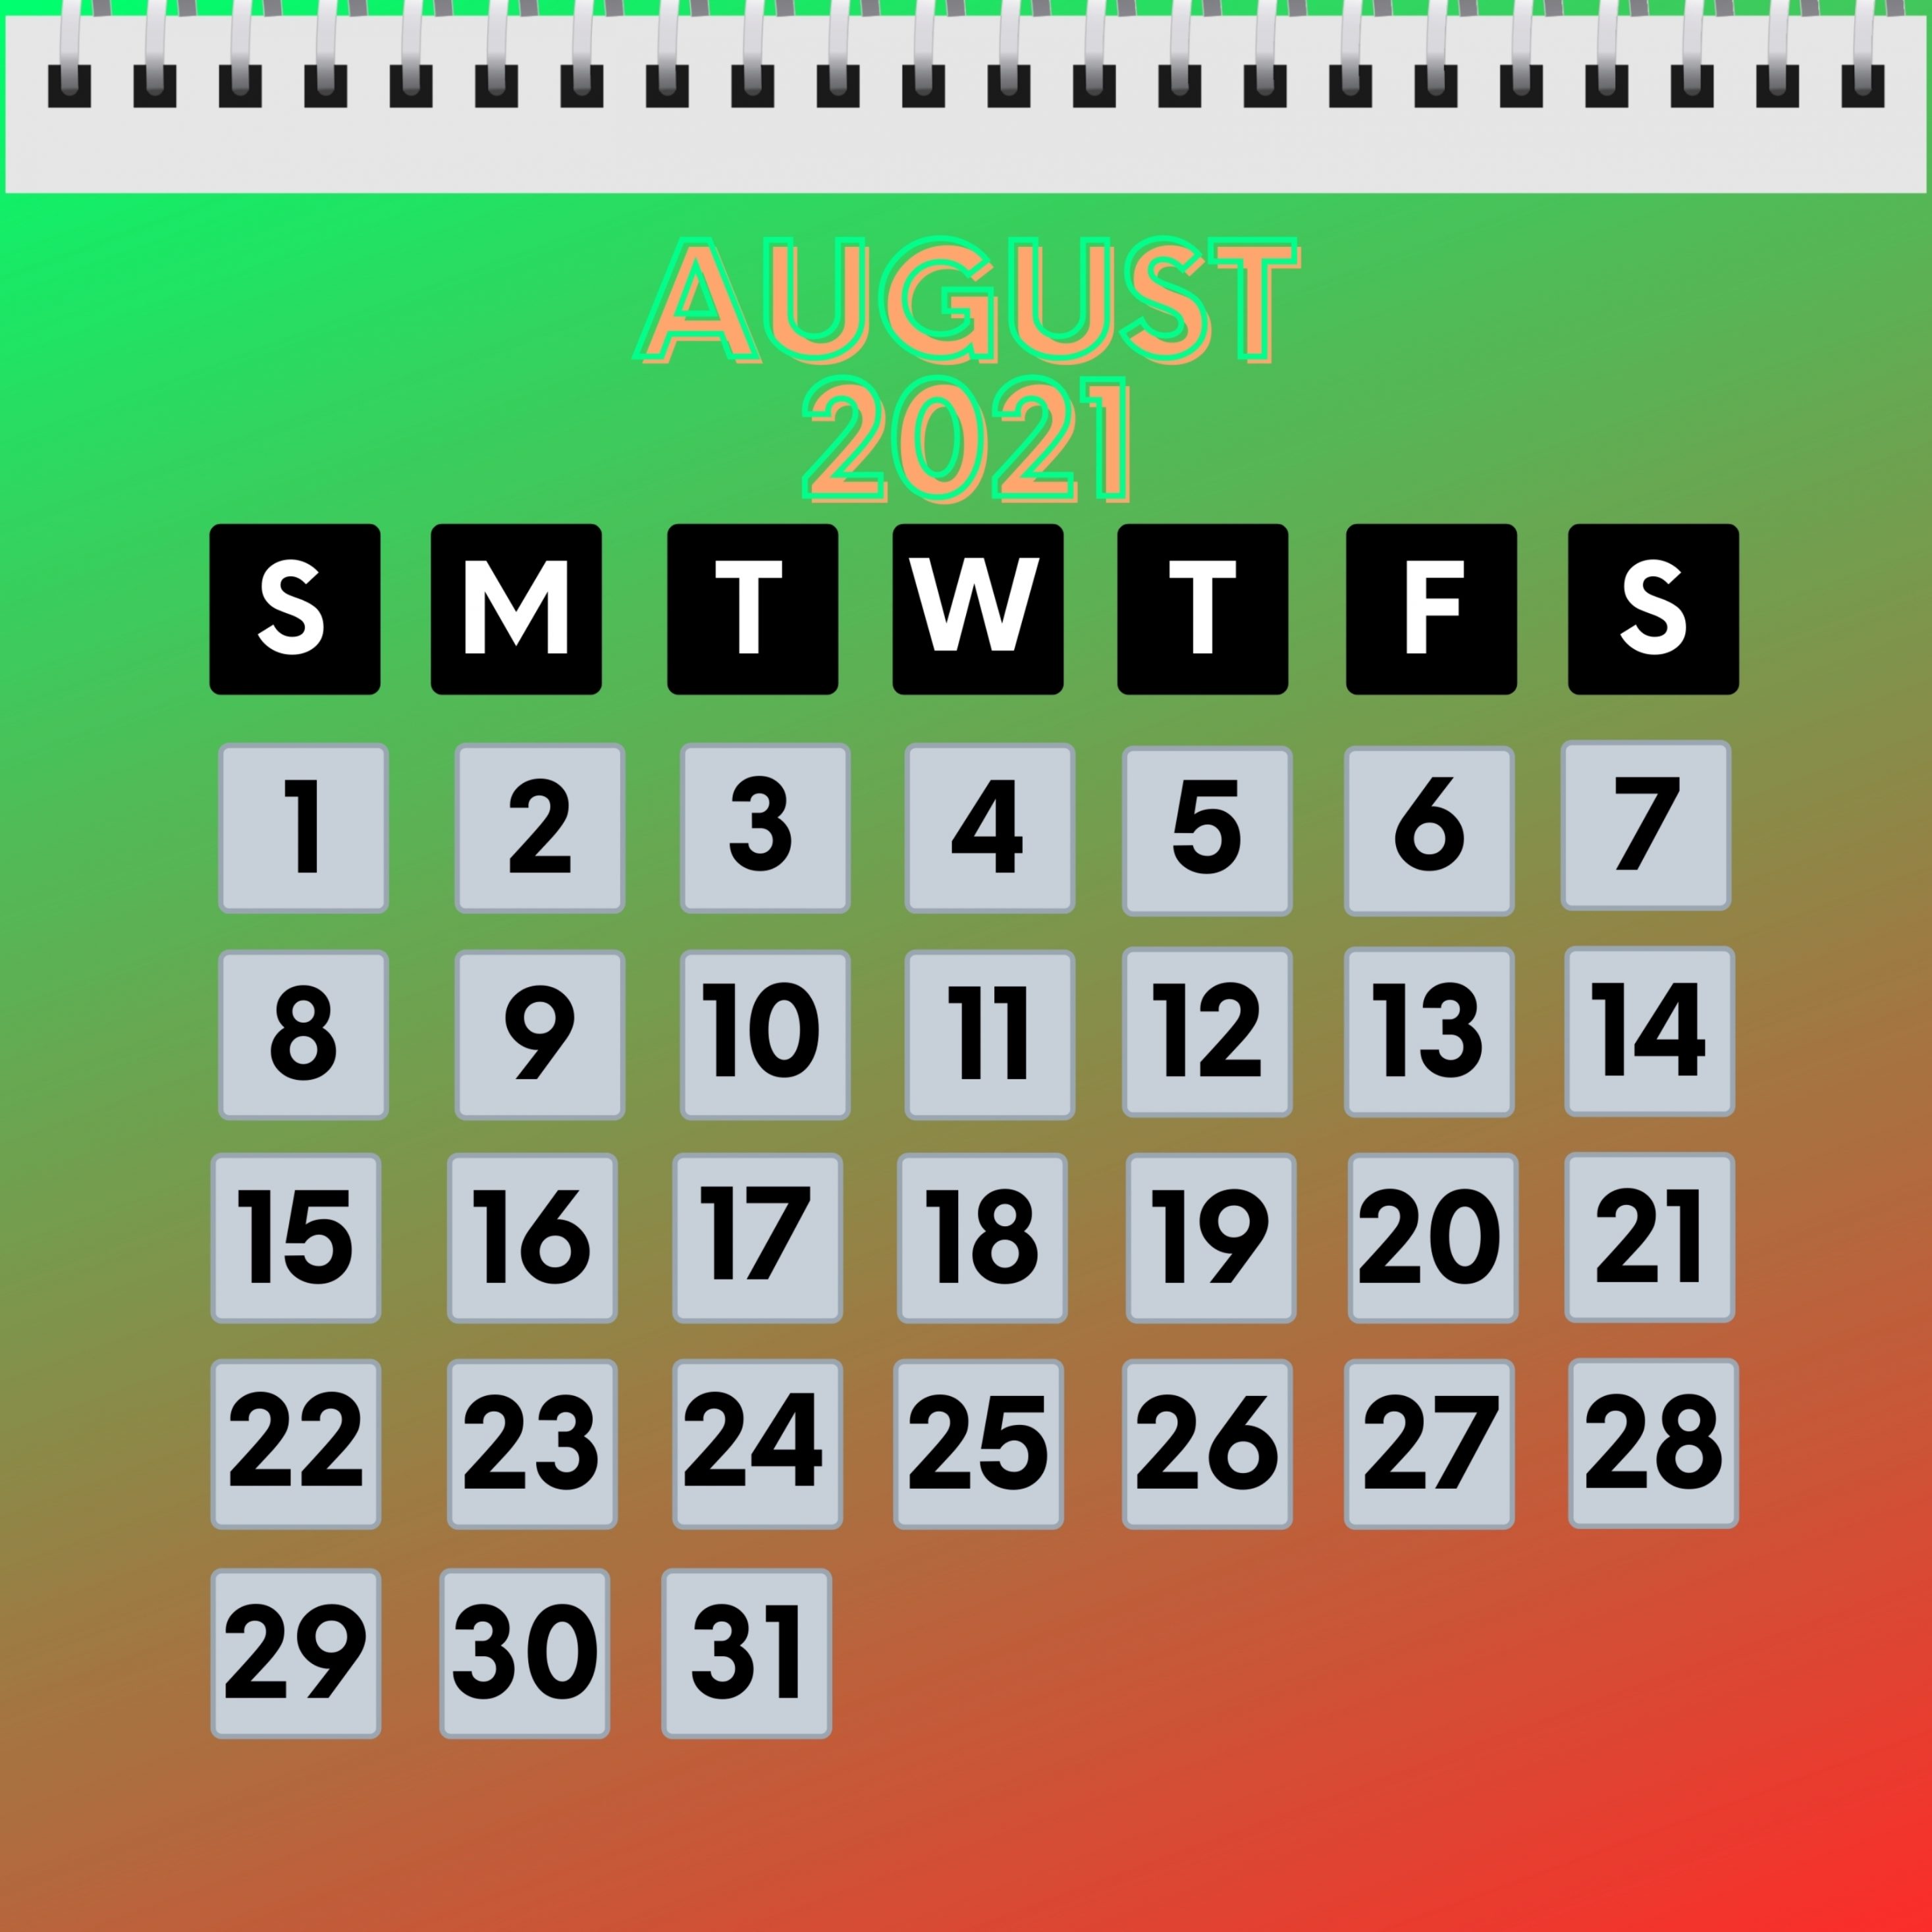 2934x2934 iOS iPad wallpaper 4k August 2021 Calendar iPad Wallpaper 2934x2934 pixels resolution